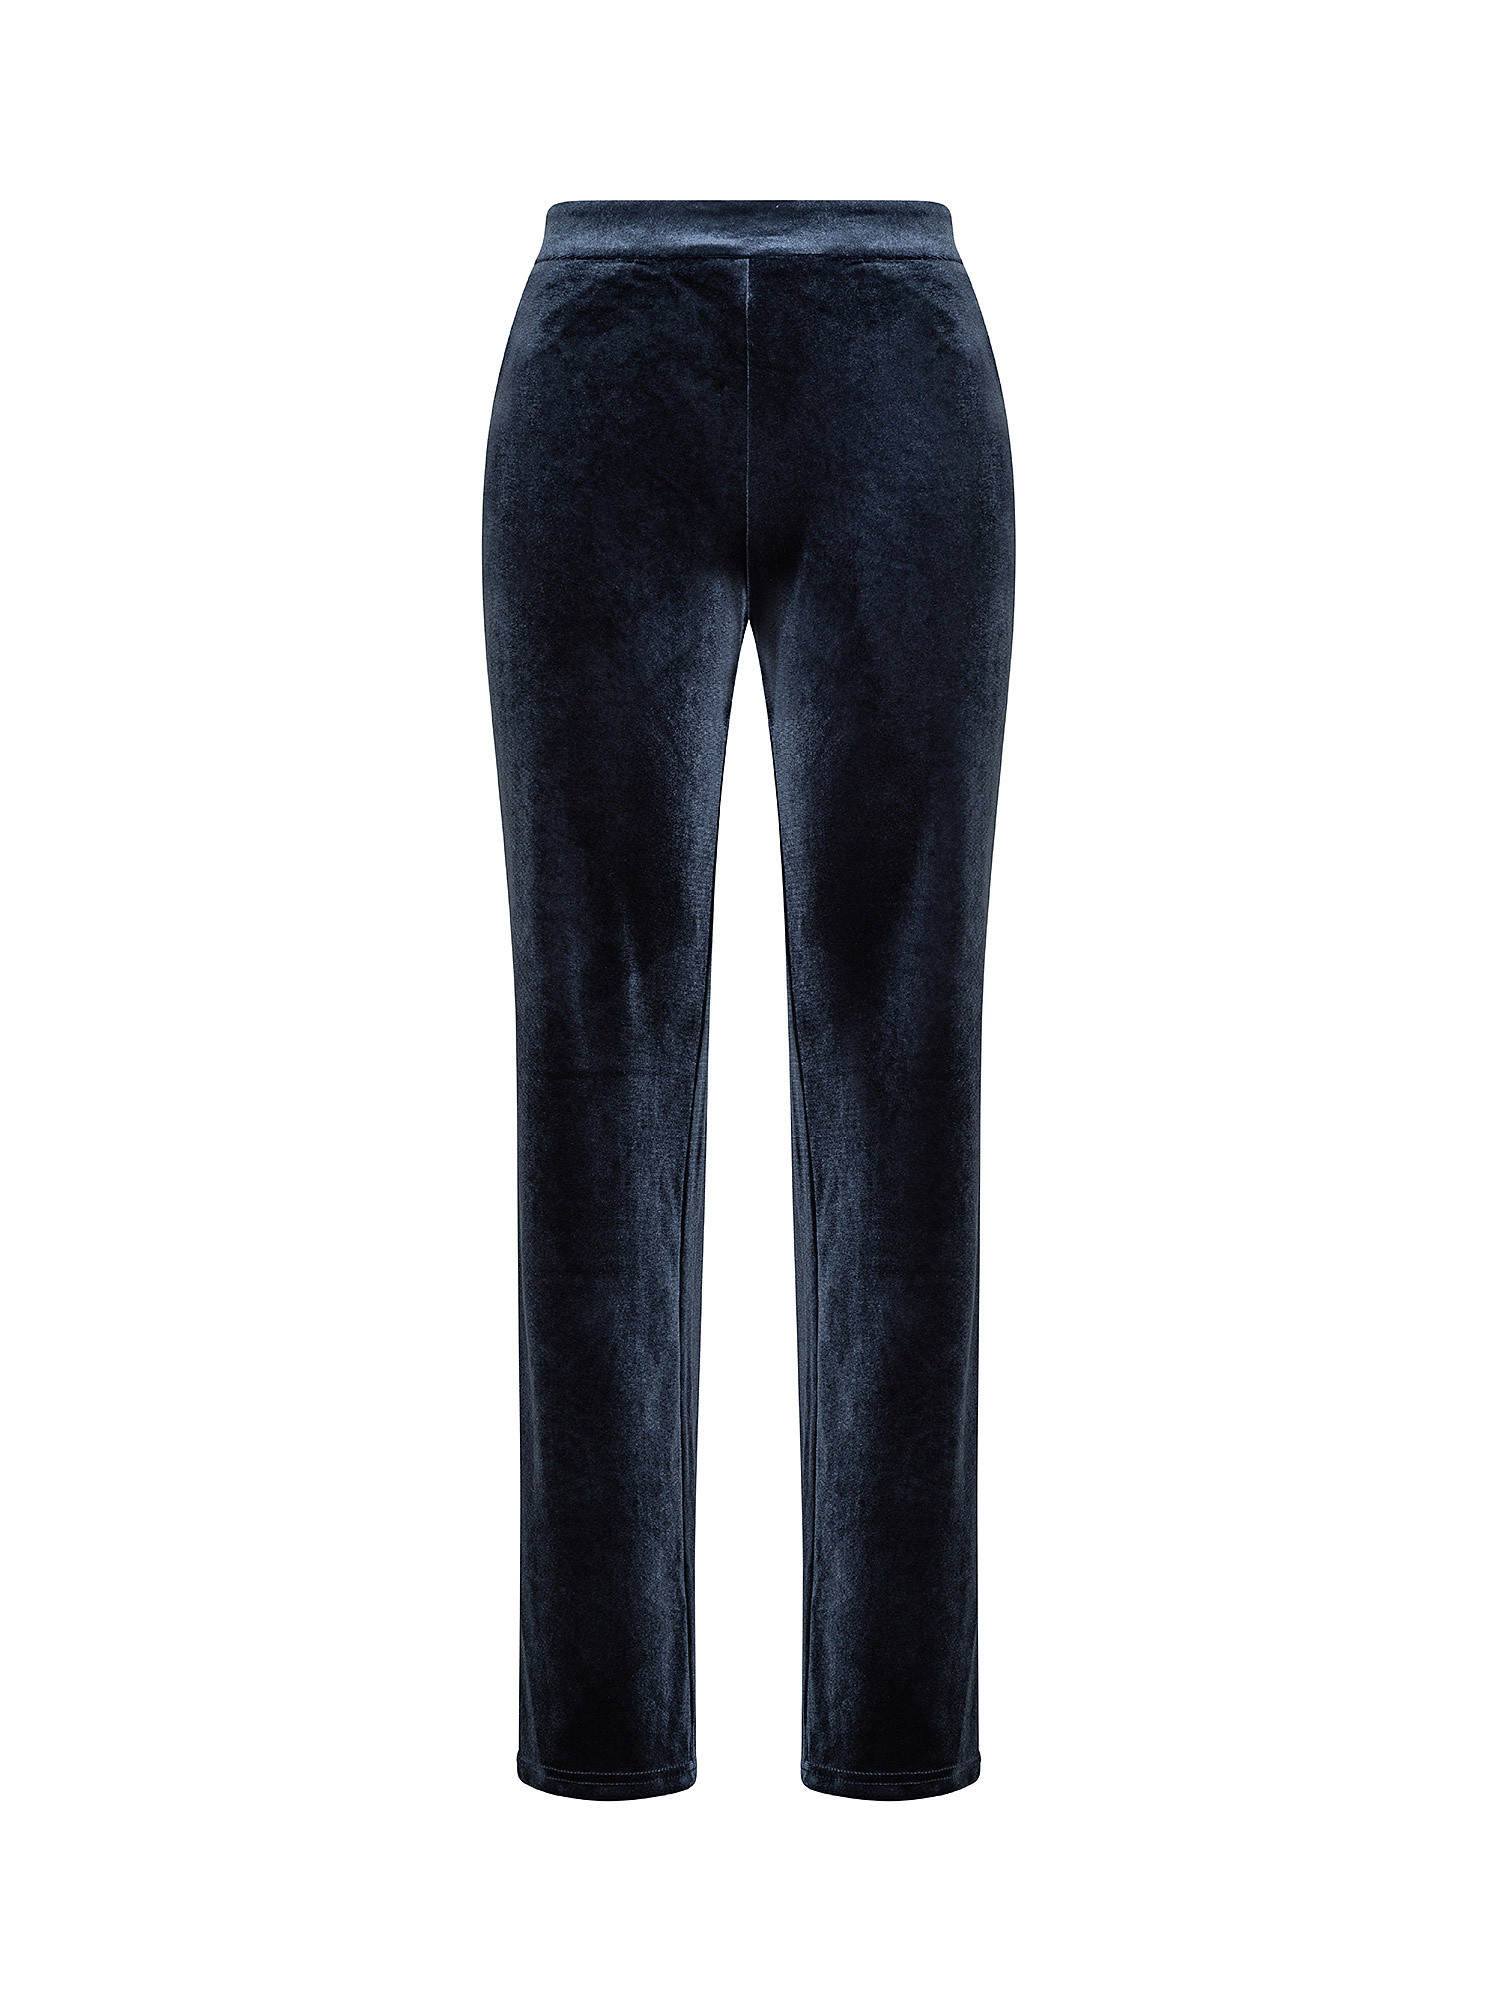 Pantalone in ciniglia, Blu, large image number 0